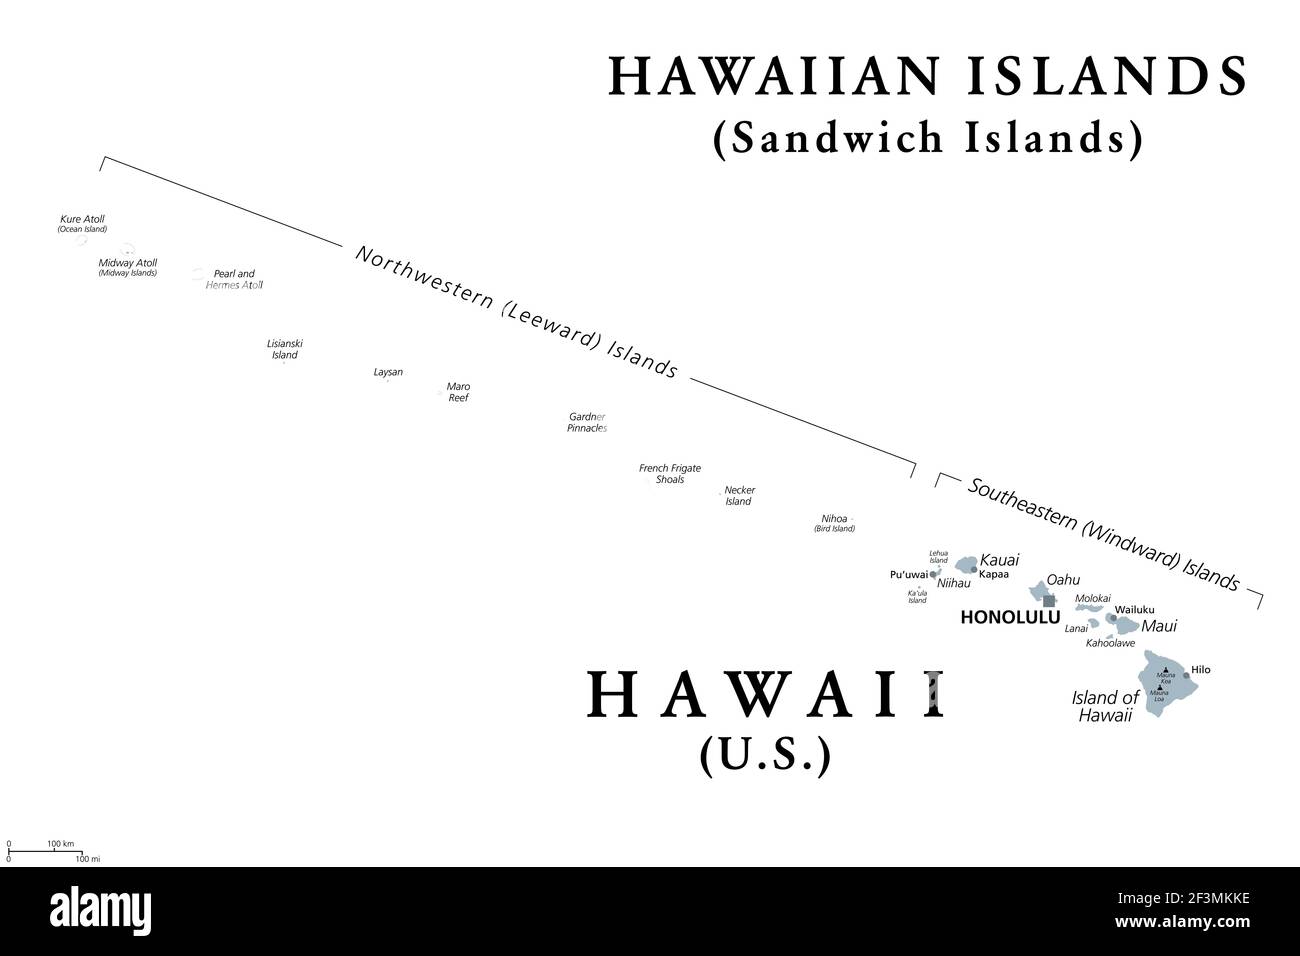 Hawaiianische Inseln, Sandwichinseln, graue politische Landkarte. US-Bundesstaat Hawaii mit der Hauptstadt Honolulu und uneingebundenen Gebiet Midway Atoll. Stockfoto